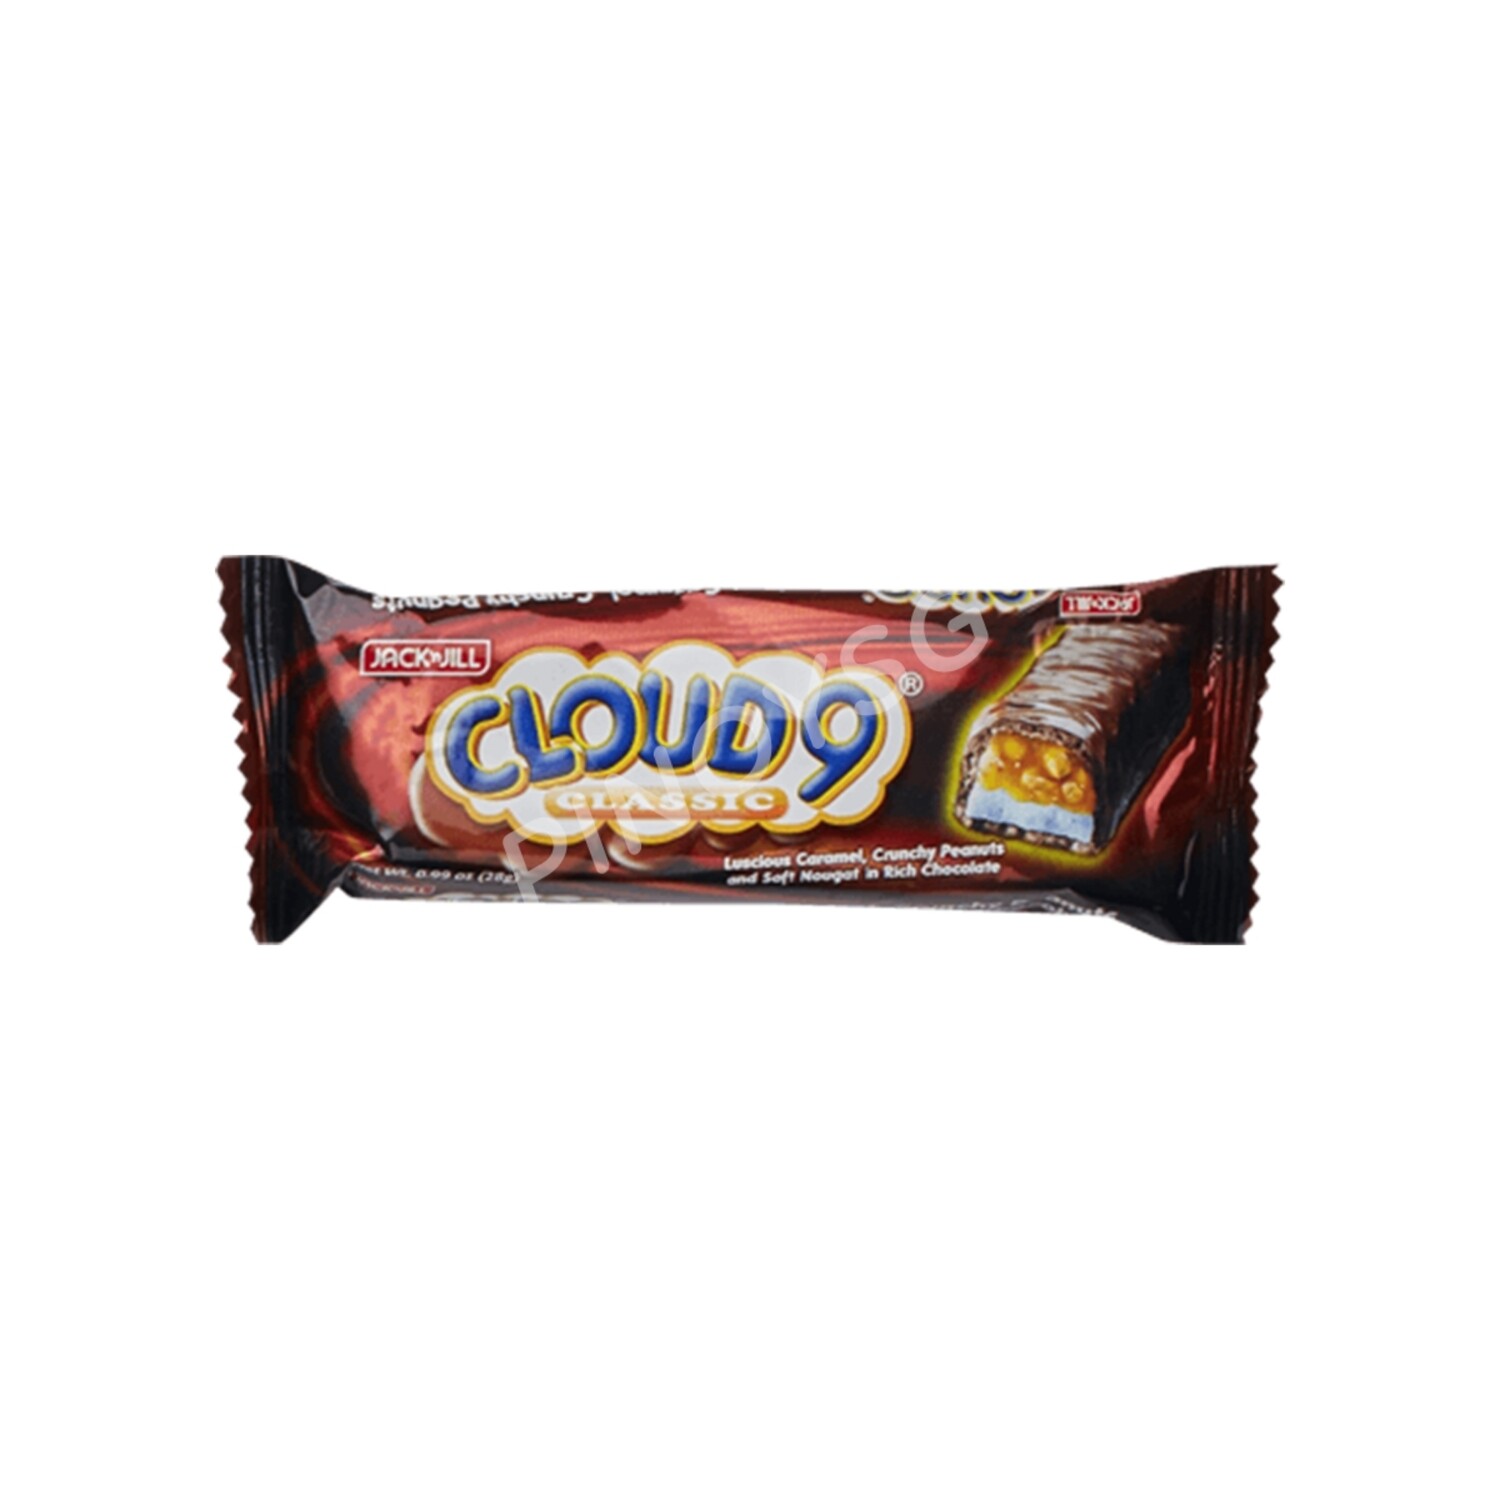 Cloud 9 Classic Choco Bar 28g